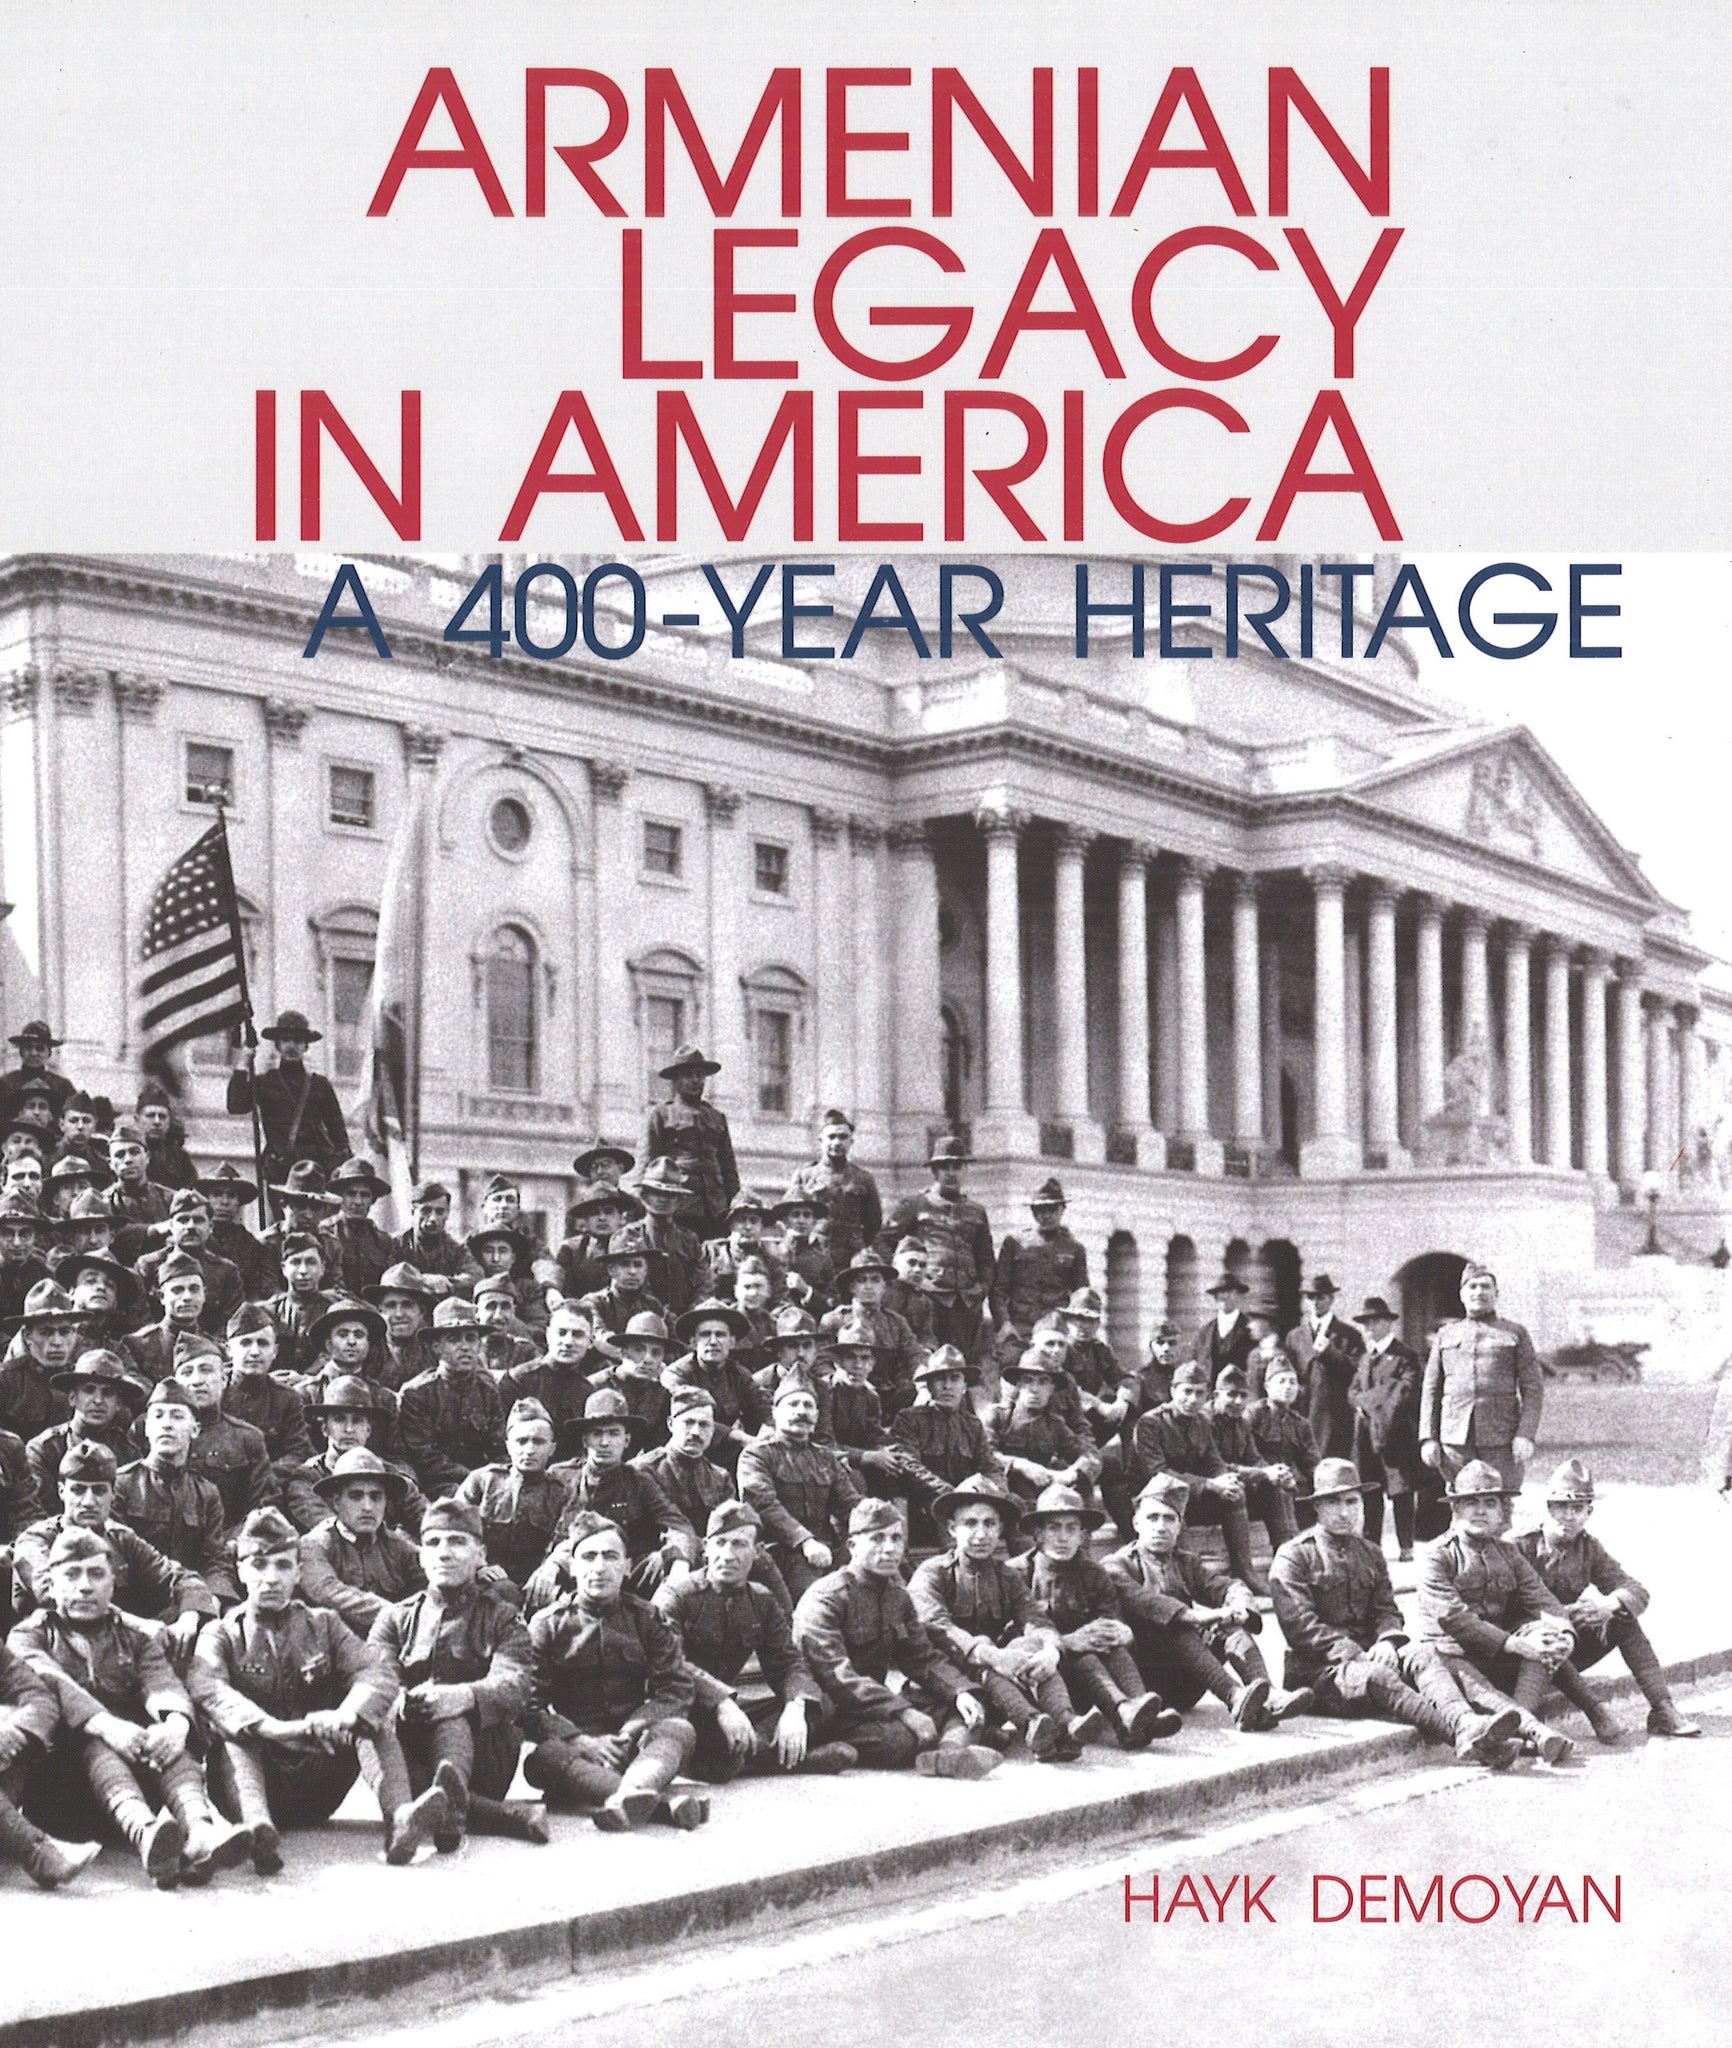 Armenian Legacy in America ~ A 400-Year Heritage